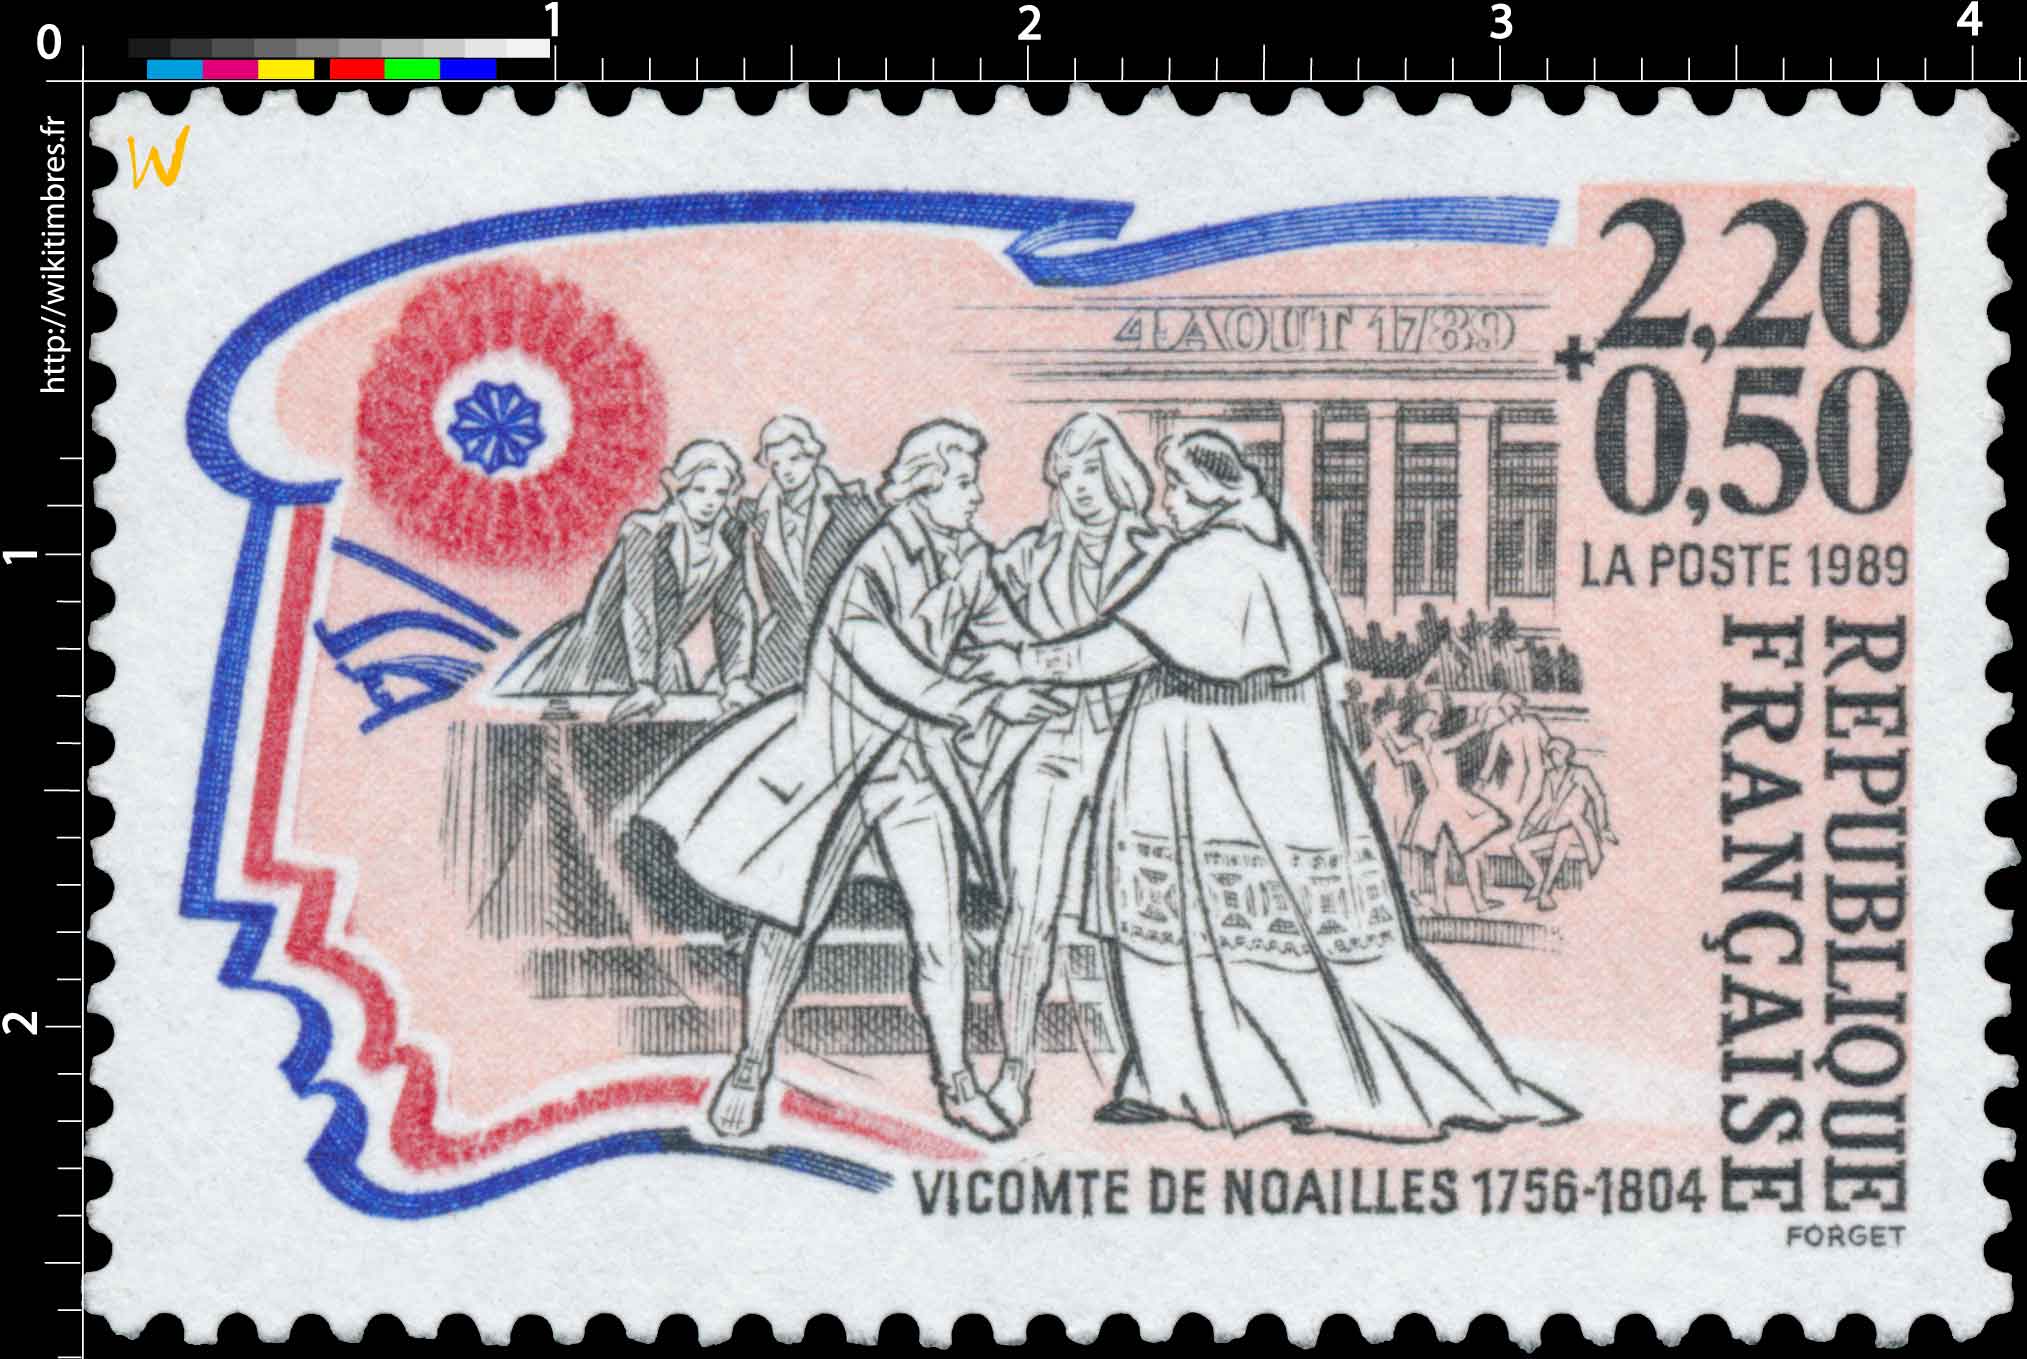 1989 VICOMTE DE NOAILLES 1756-1804